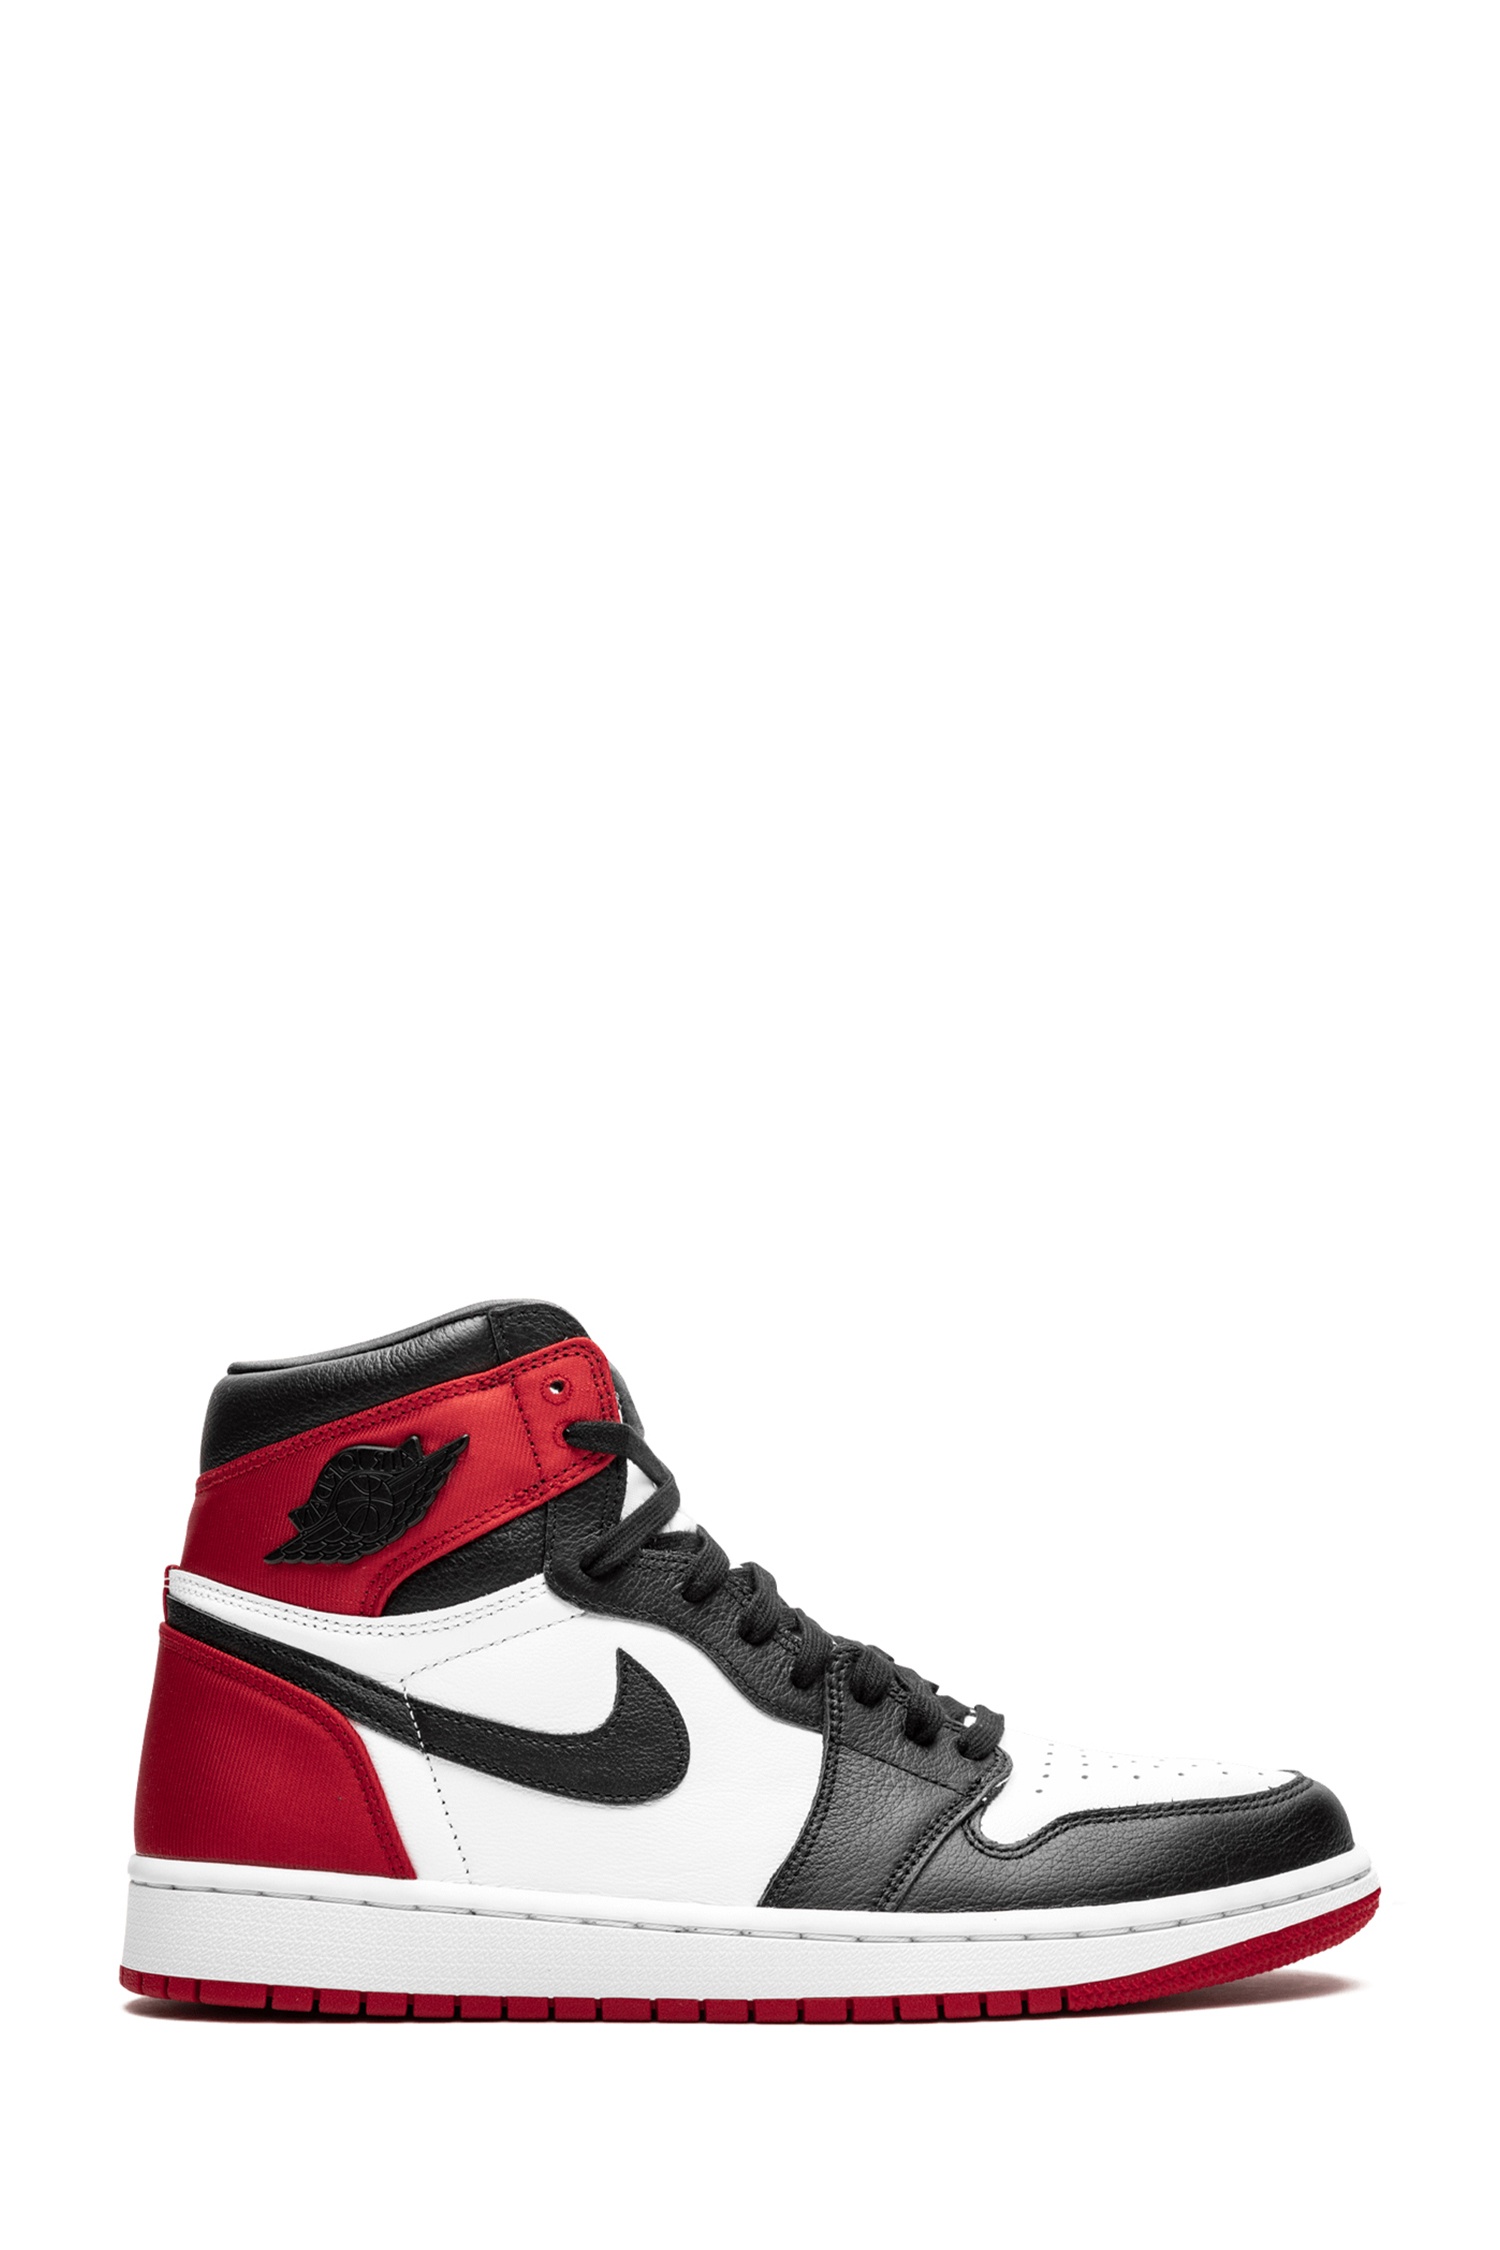 Nike Air Jordan 1 Retro High Satin (W 